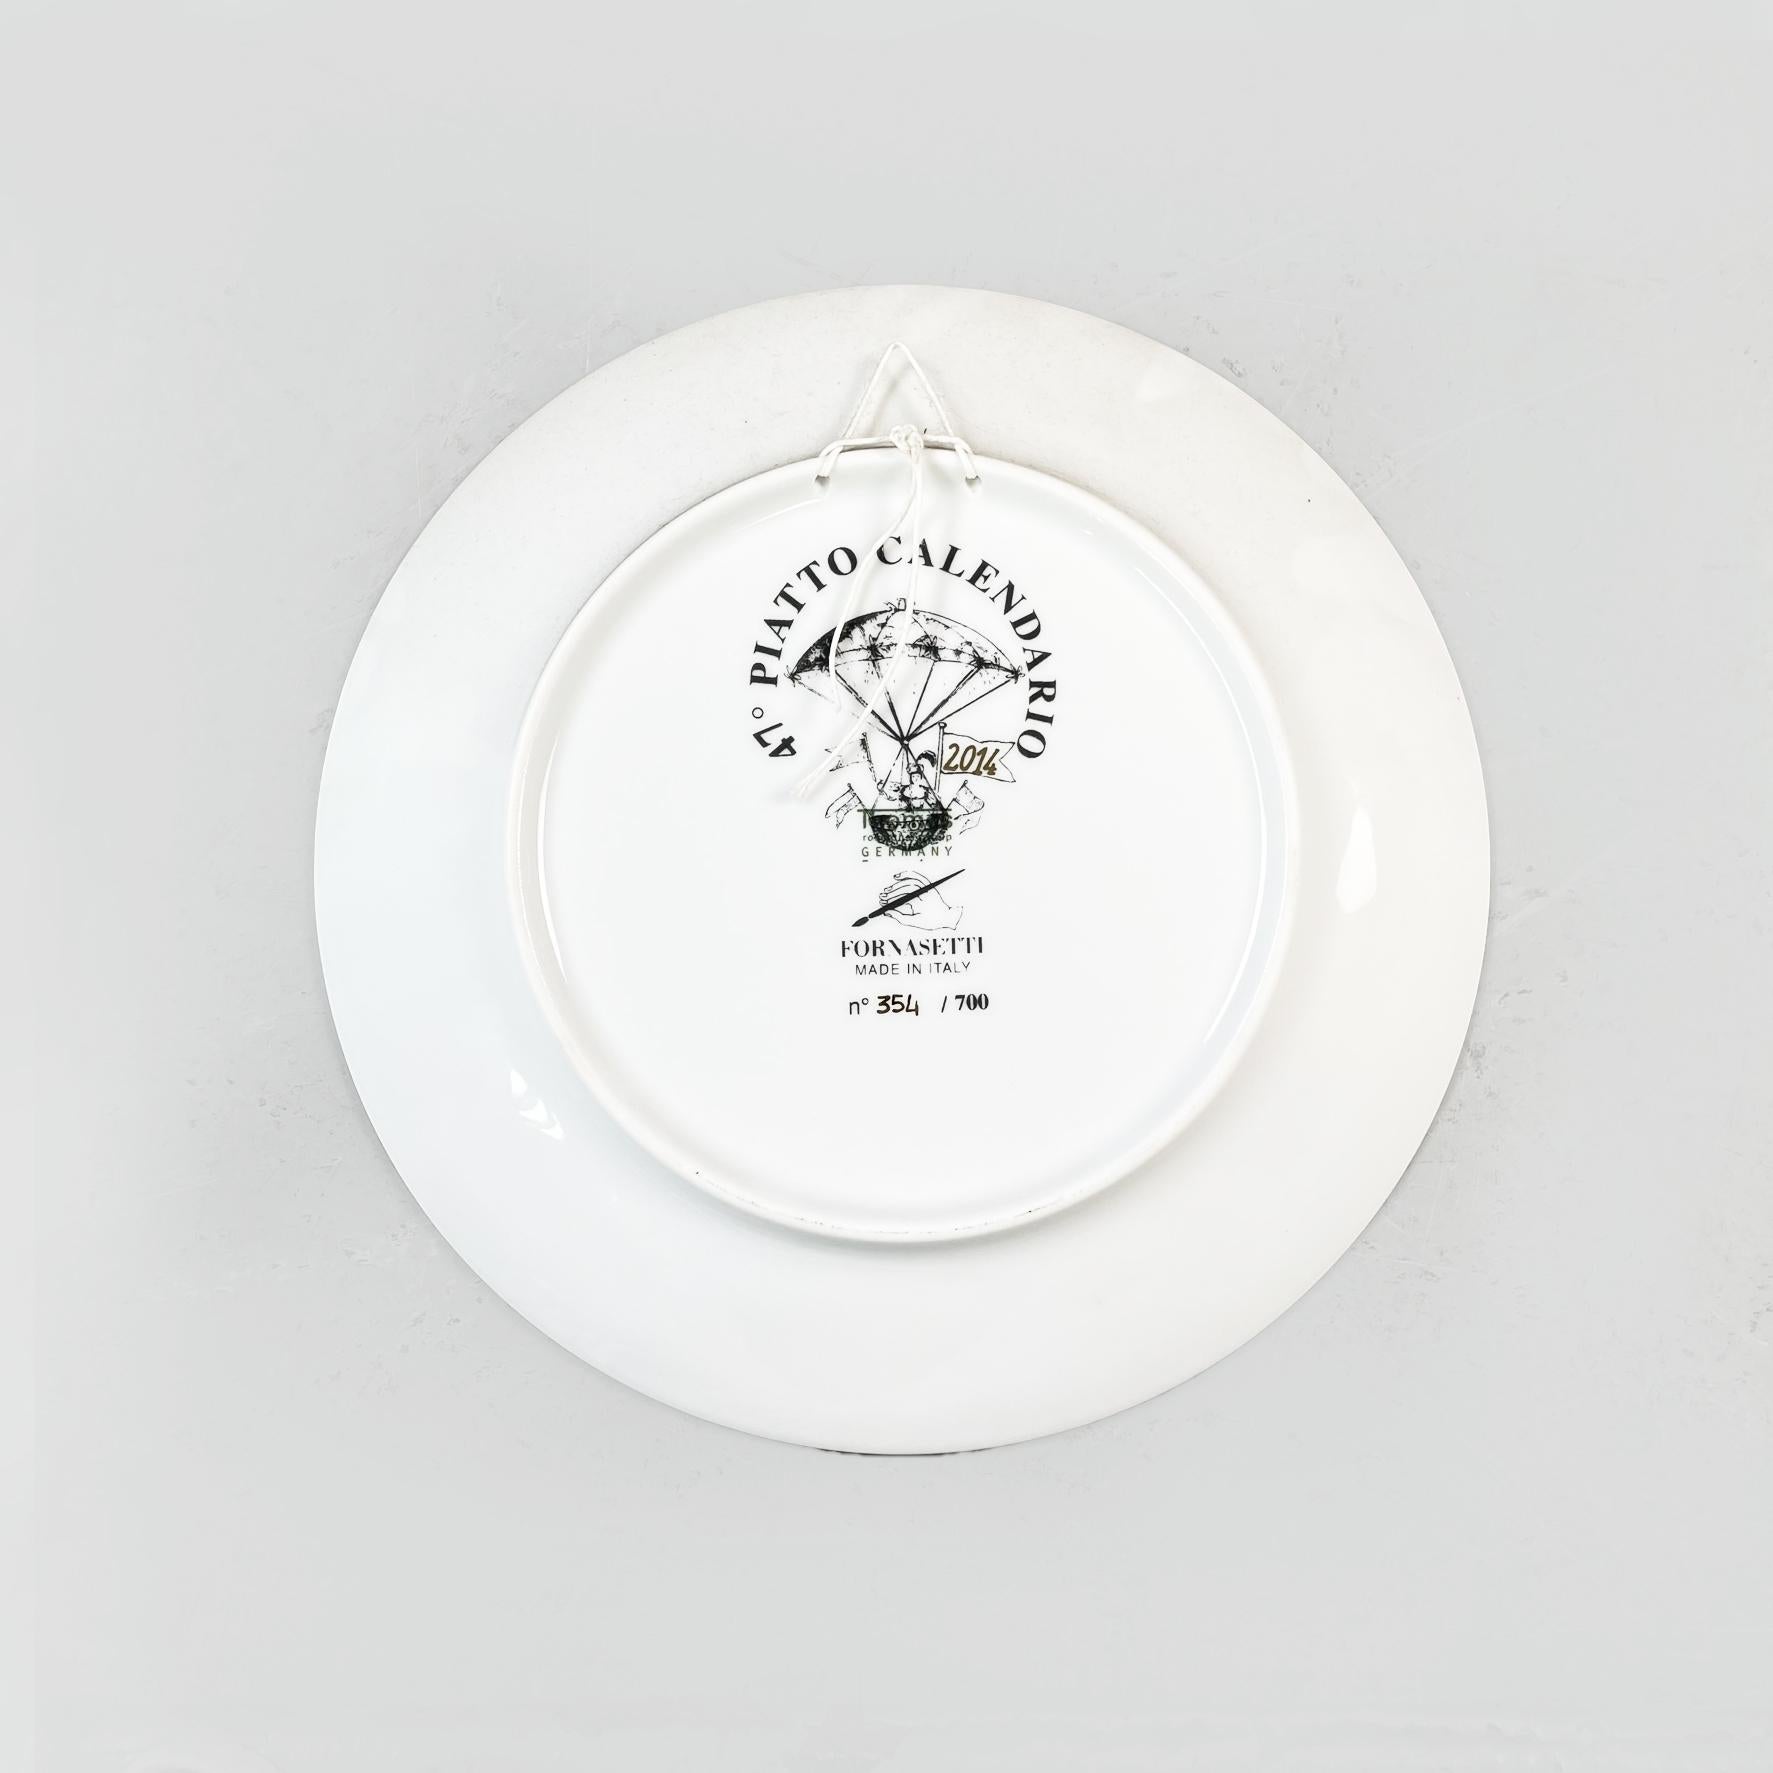 Contemporary Italian Post-Modern Ceramic Wall Calendar Plate 2014 by Fornasetti, 2014